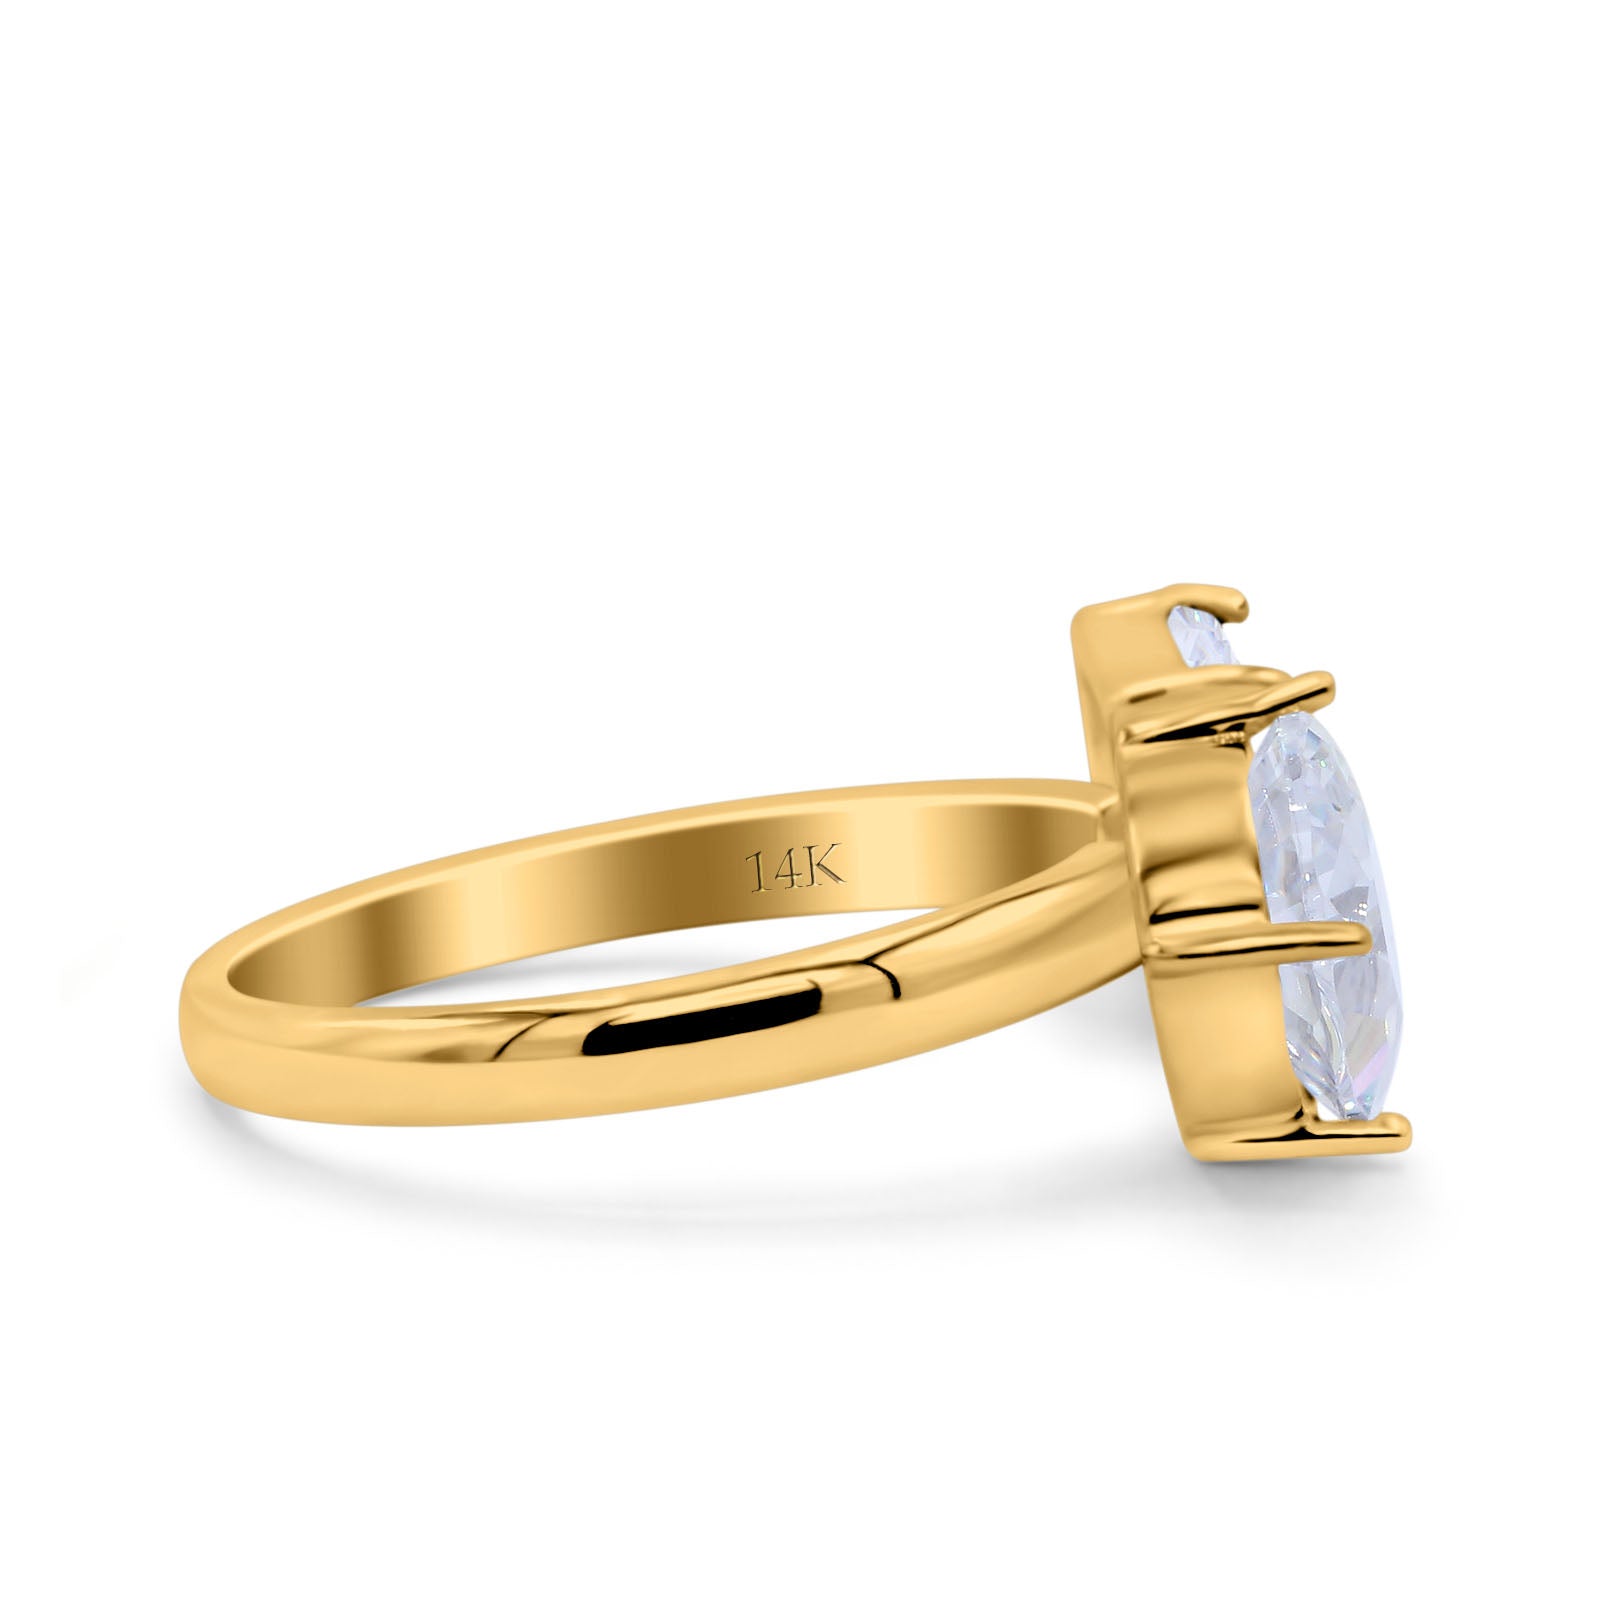 14K Gold Open Teardrop Pear Emerald Cut Shape Wedding Bridal Simulated Cubic Zirconia Cocktail Ring